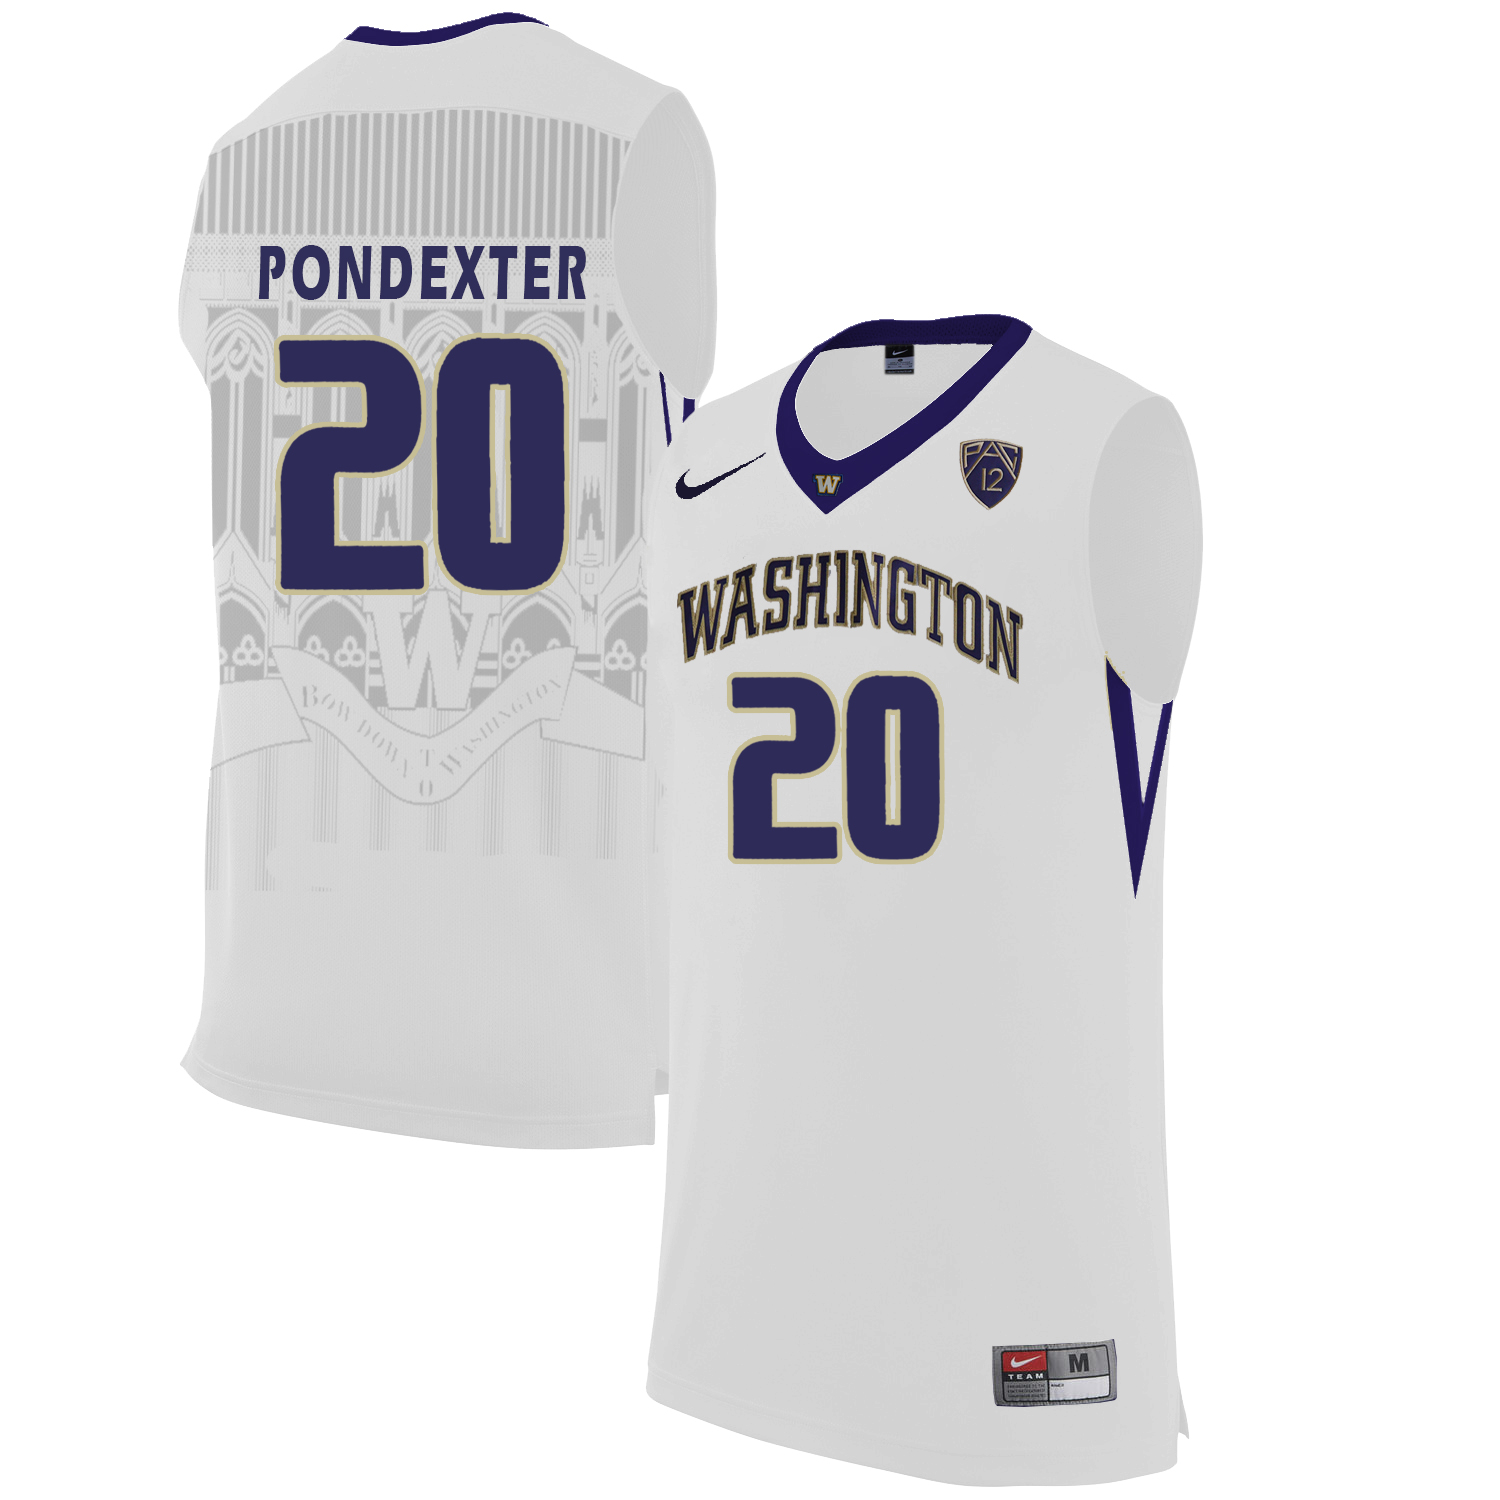 Washington Huskies 20 Quincy Pondexter White College Basketball Jersey